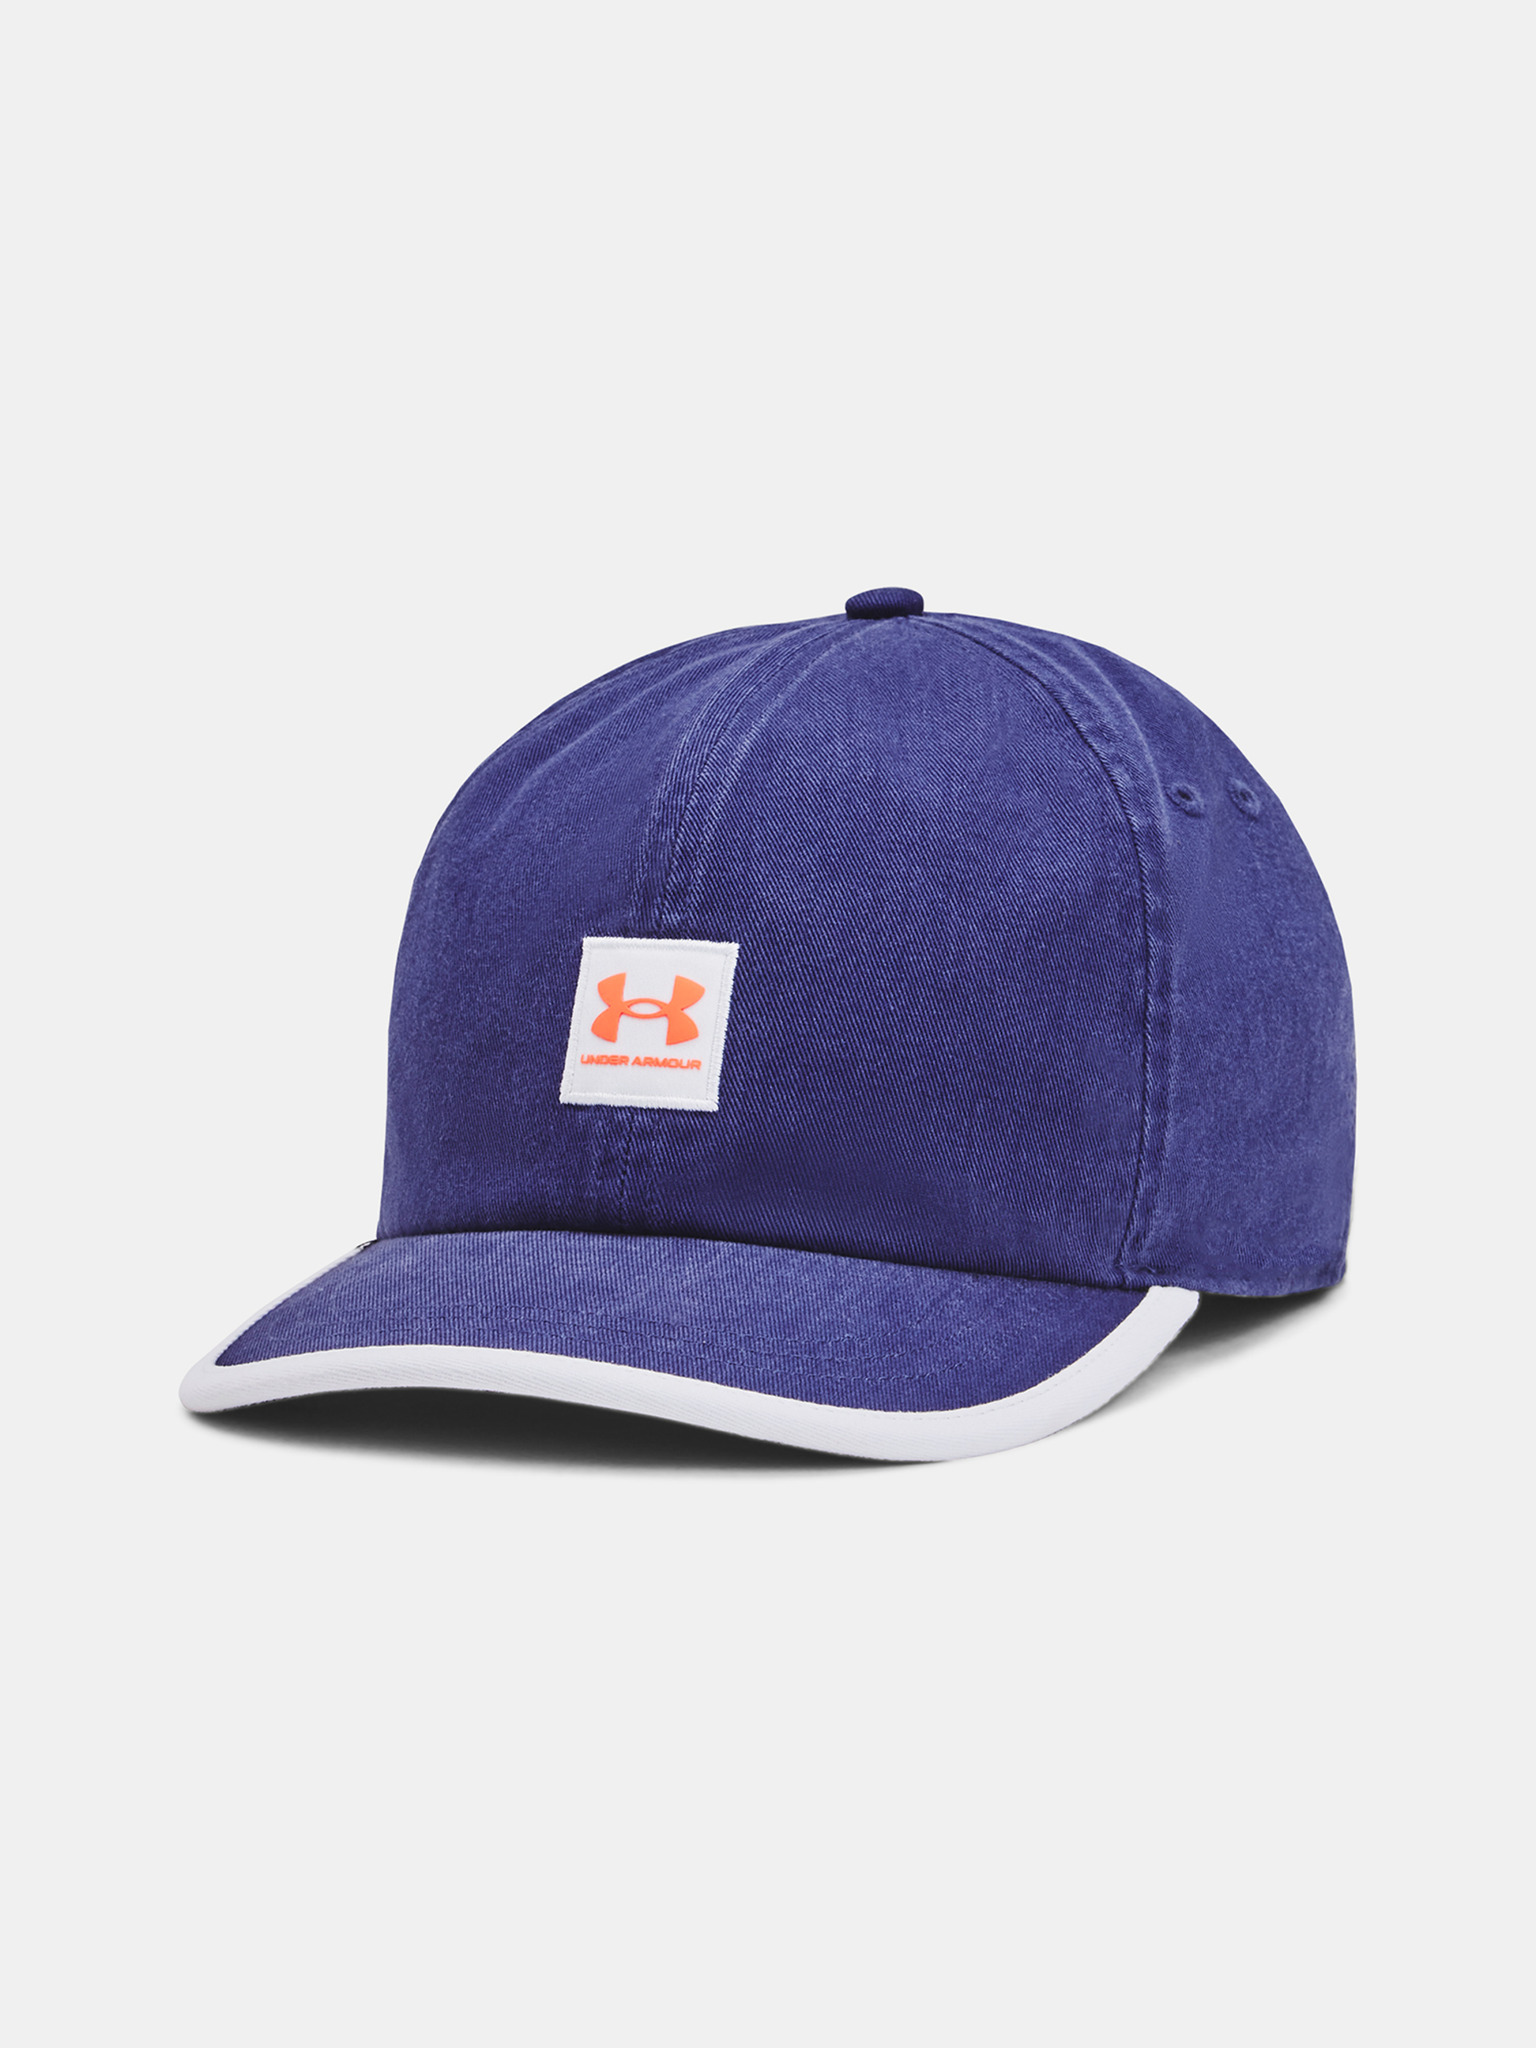 Under Armour - Men's UA Branded Snapback-BLU Cap